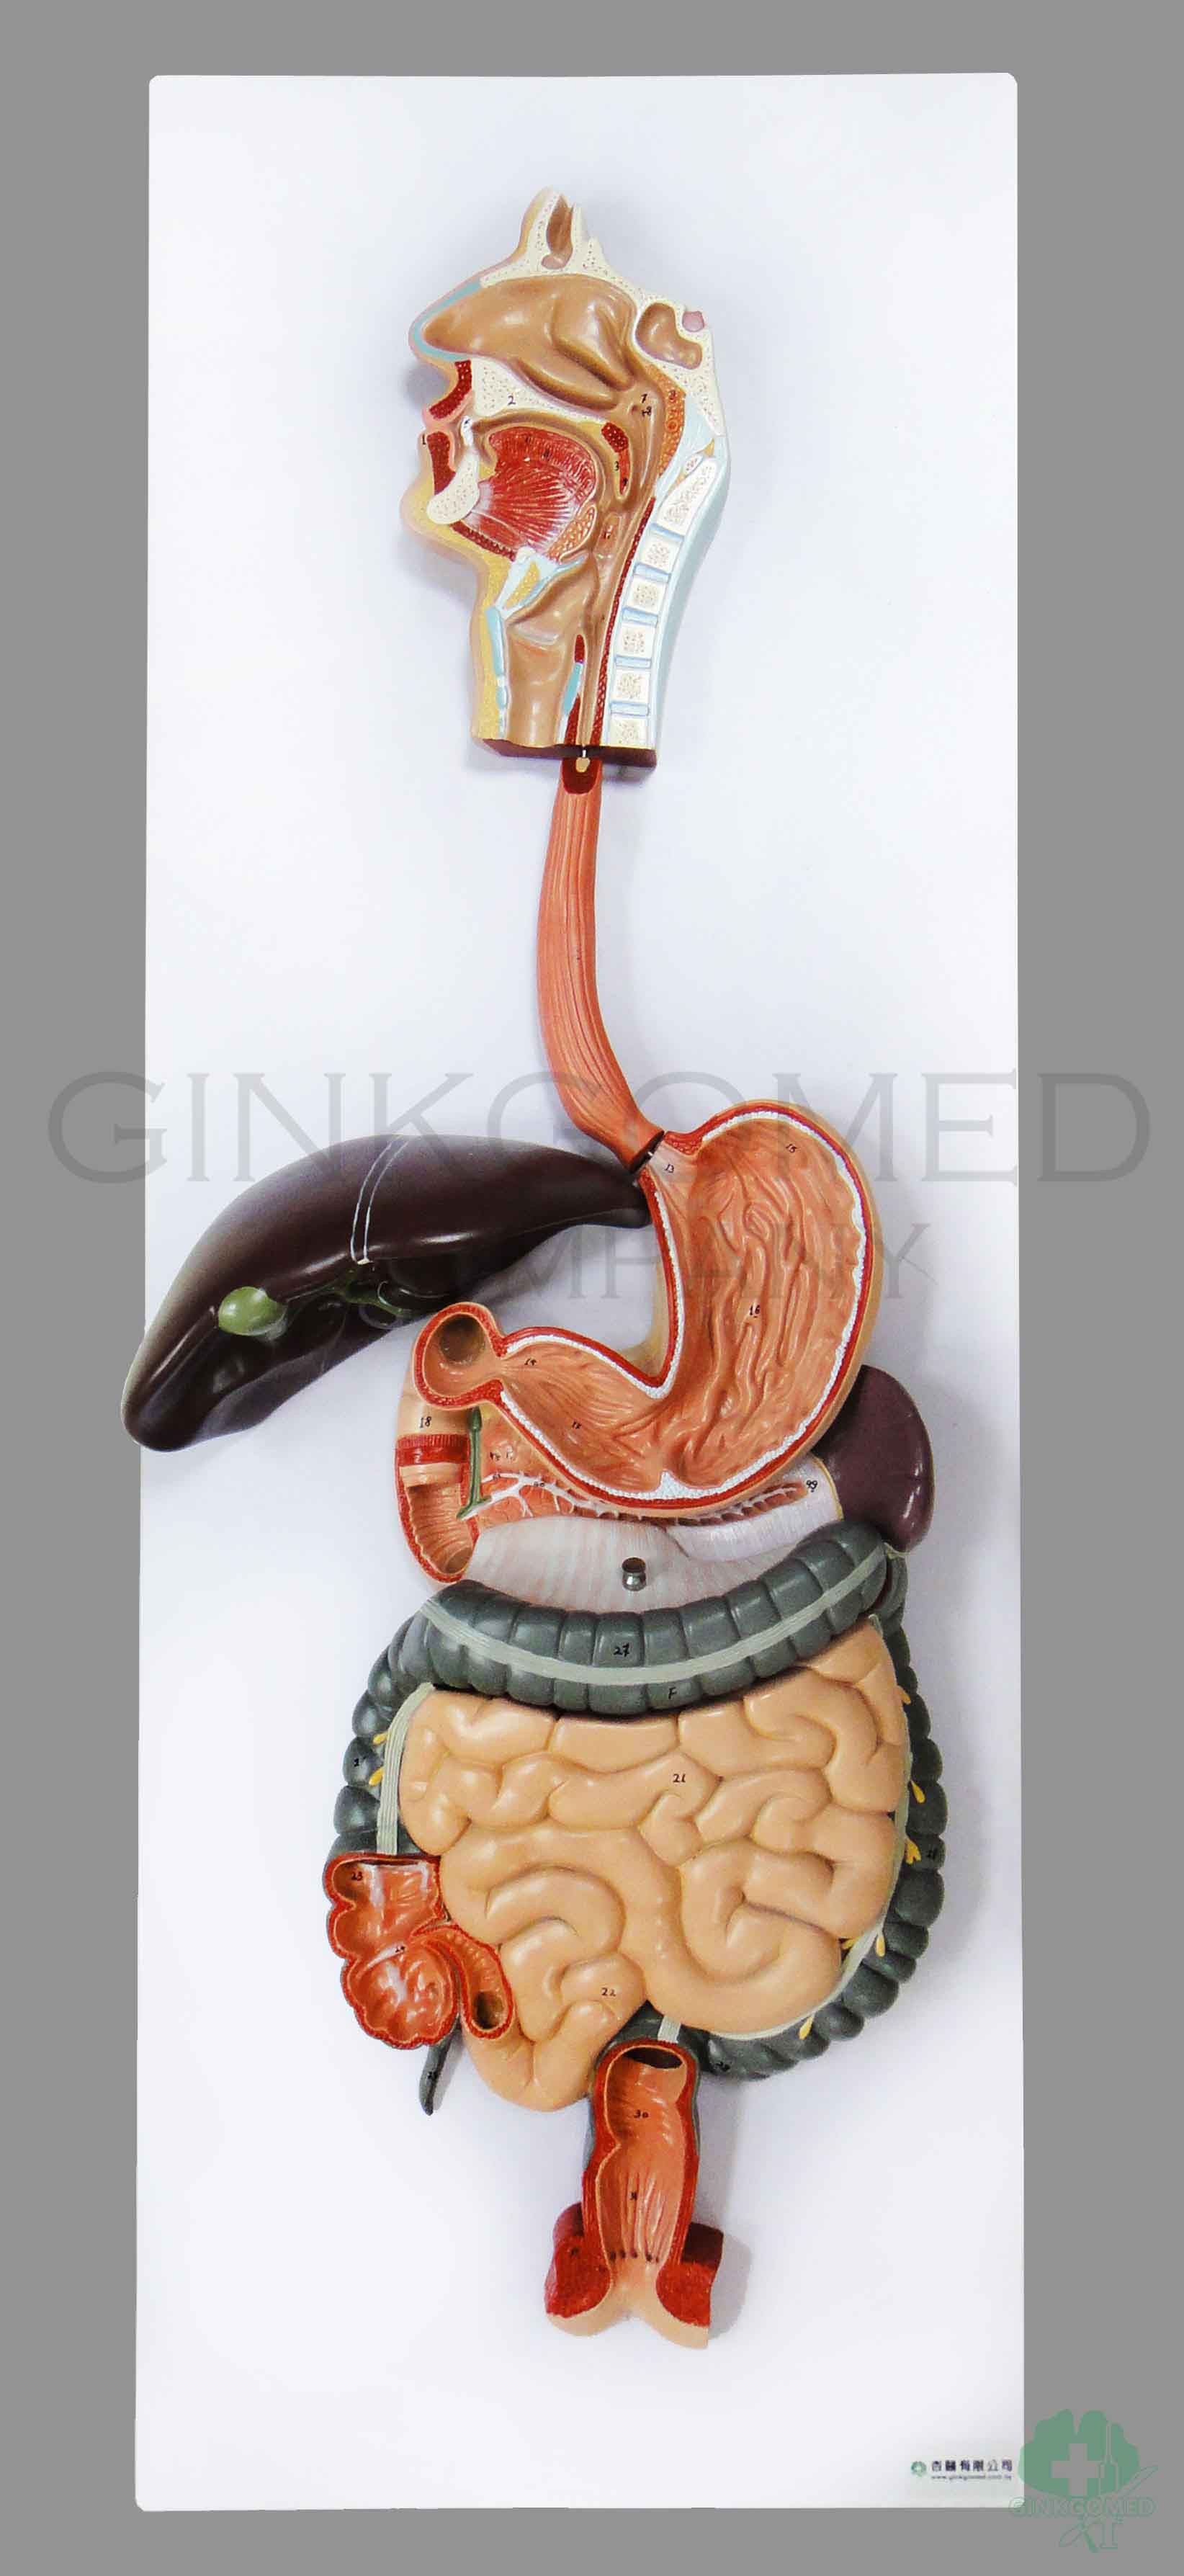 GM-040001 Human Digestive System